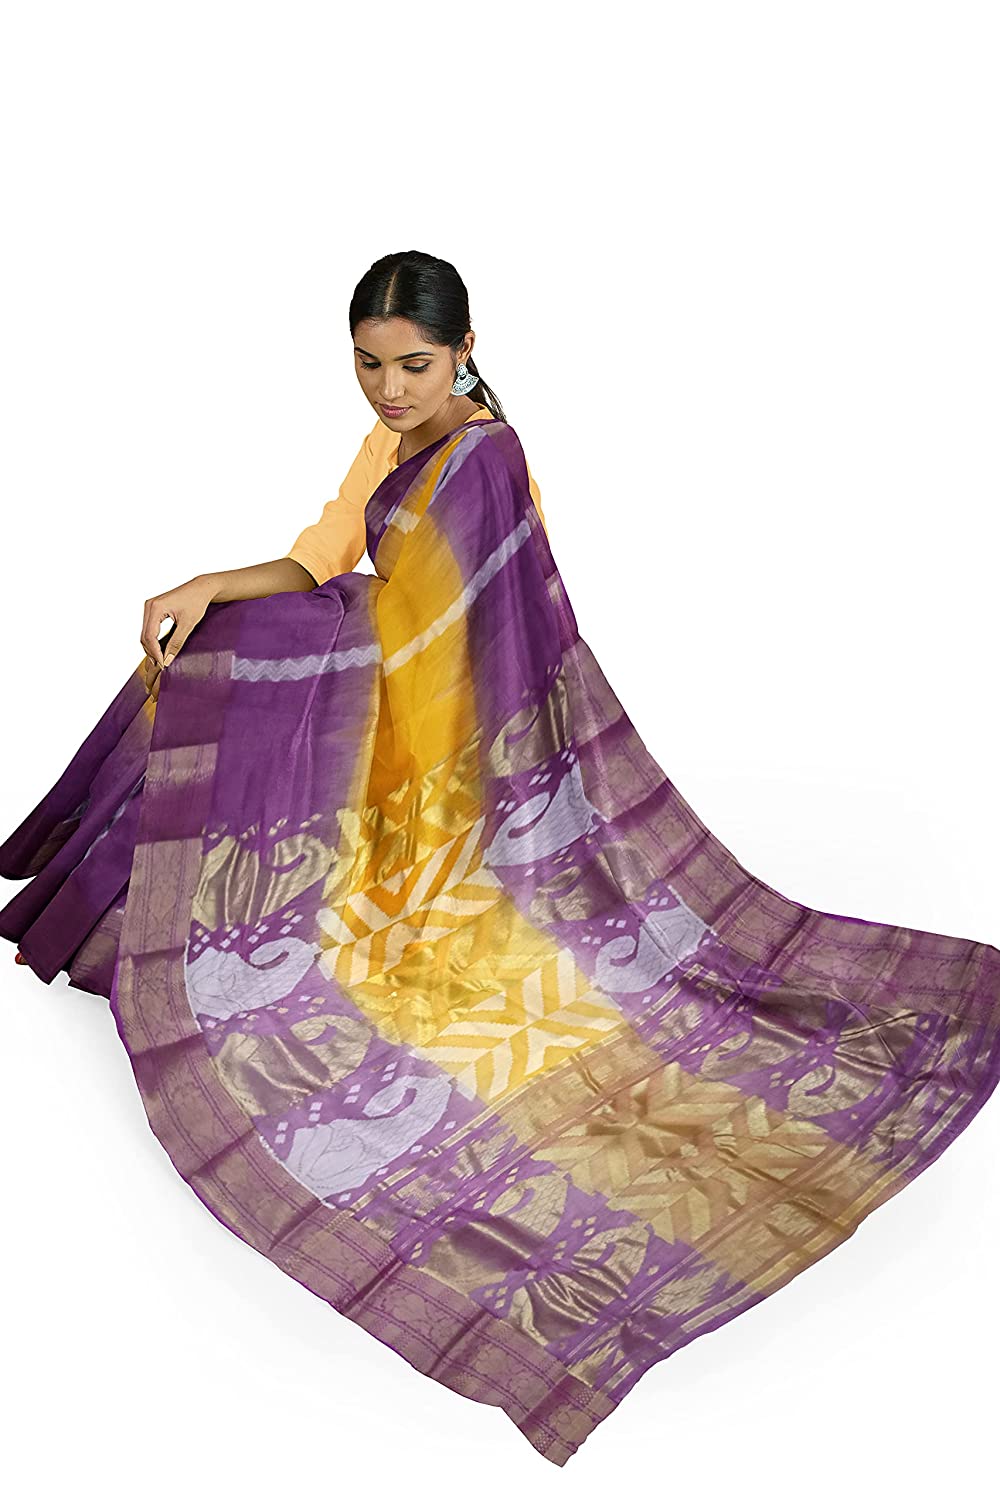 Pradip Fabrics Yellow and Purple Tant Silk Blend Saree